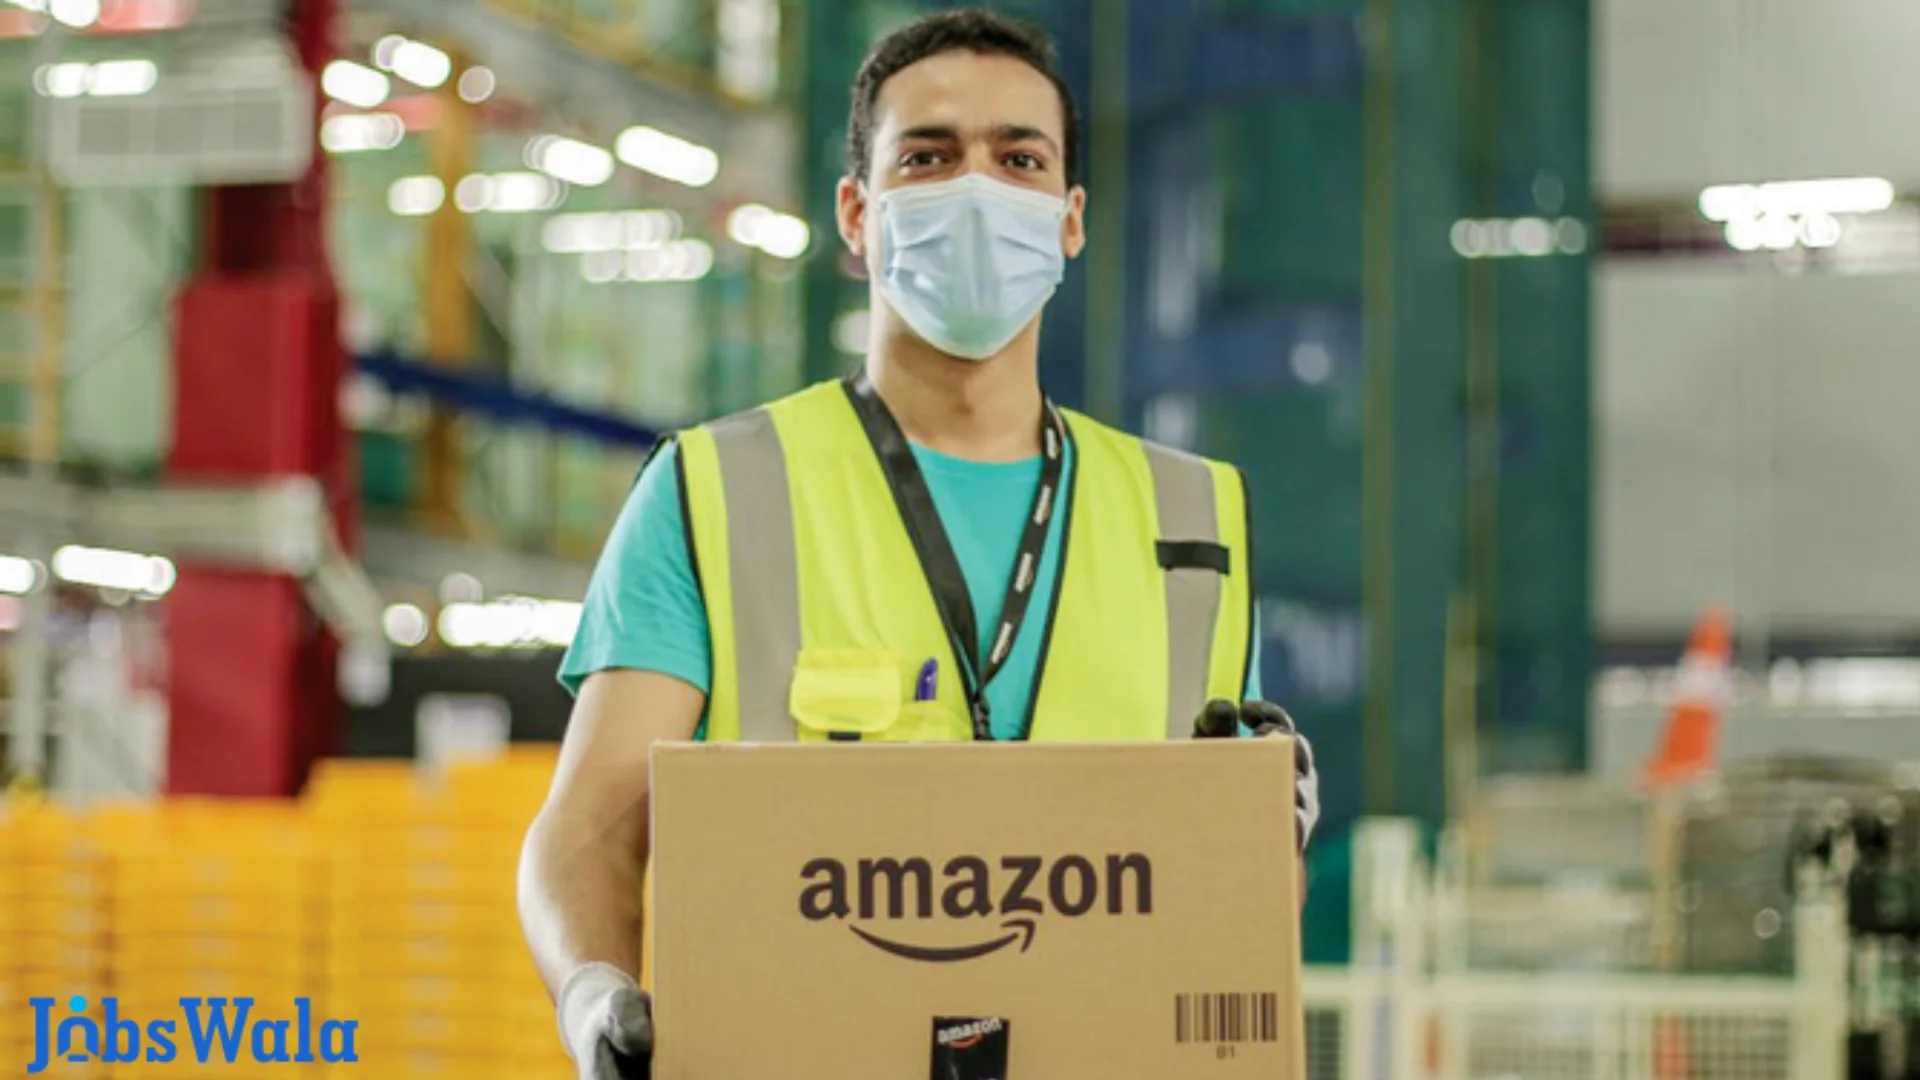 Amazon's Jobs in Saudi Arabia Offering up to 12,000 Saudi Riyals